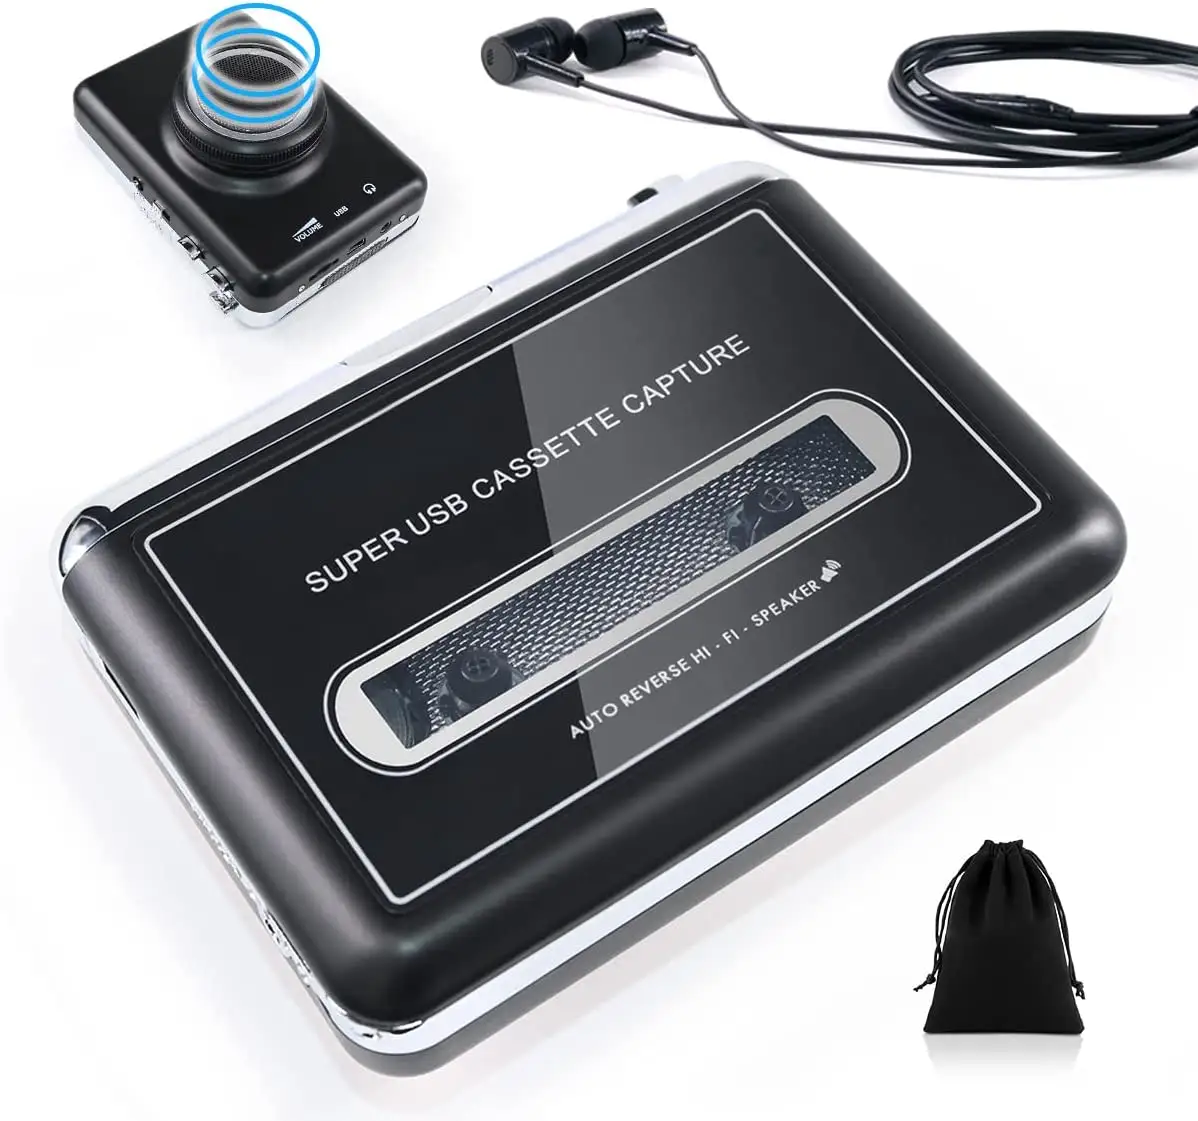 Stereo portable walkman auto reverse cassette player with earphone, detachable speaker, converter to MP3/WAV/CD via USB wire